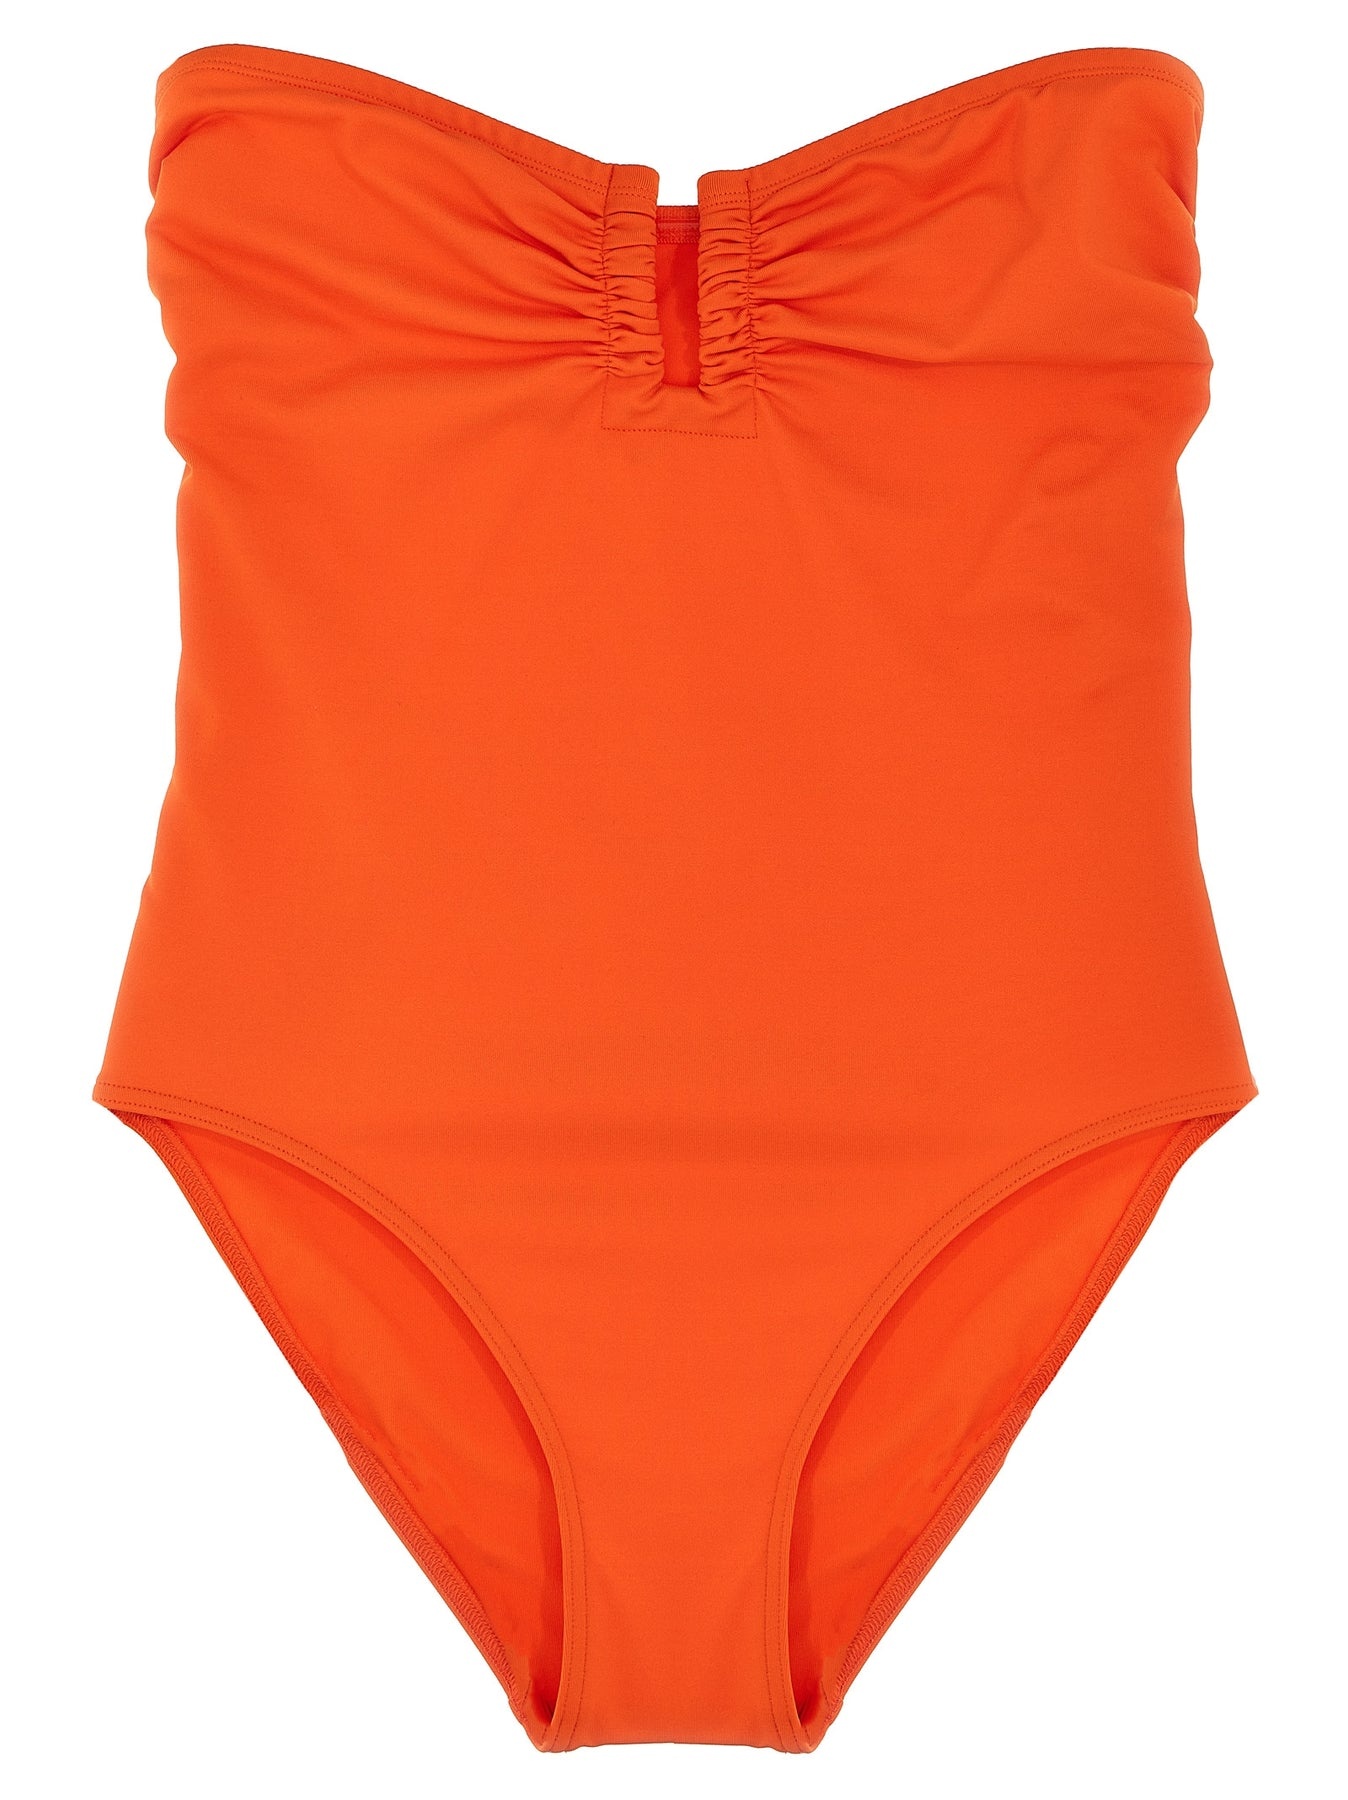 Cassiopee Beachwear Orange - 1